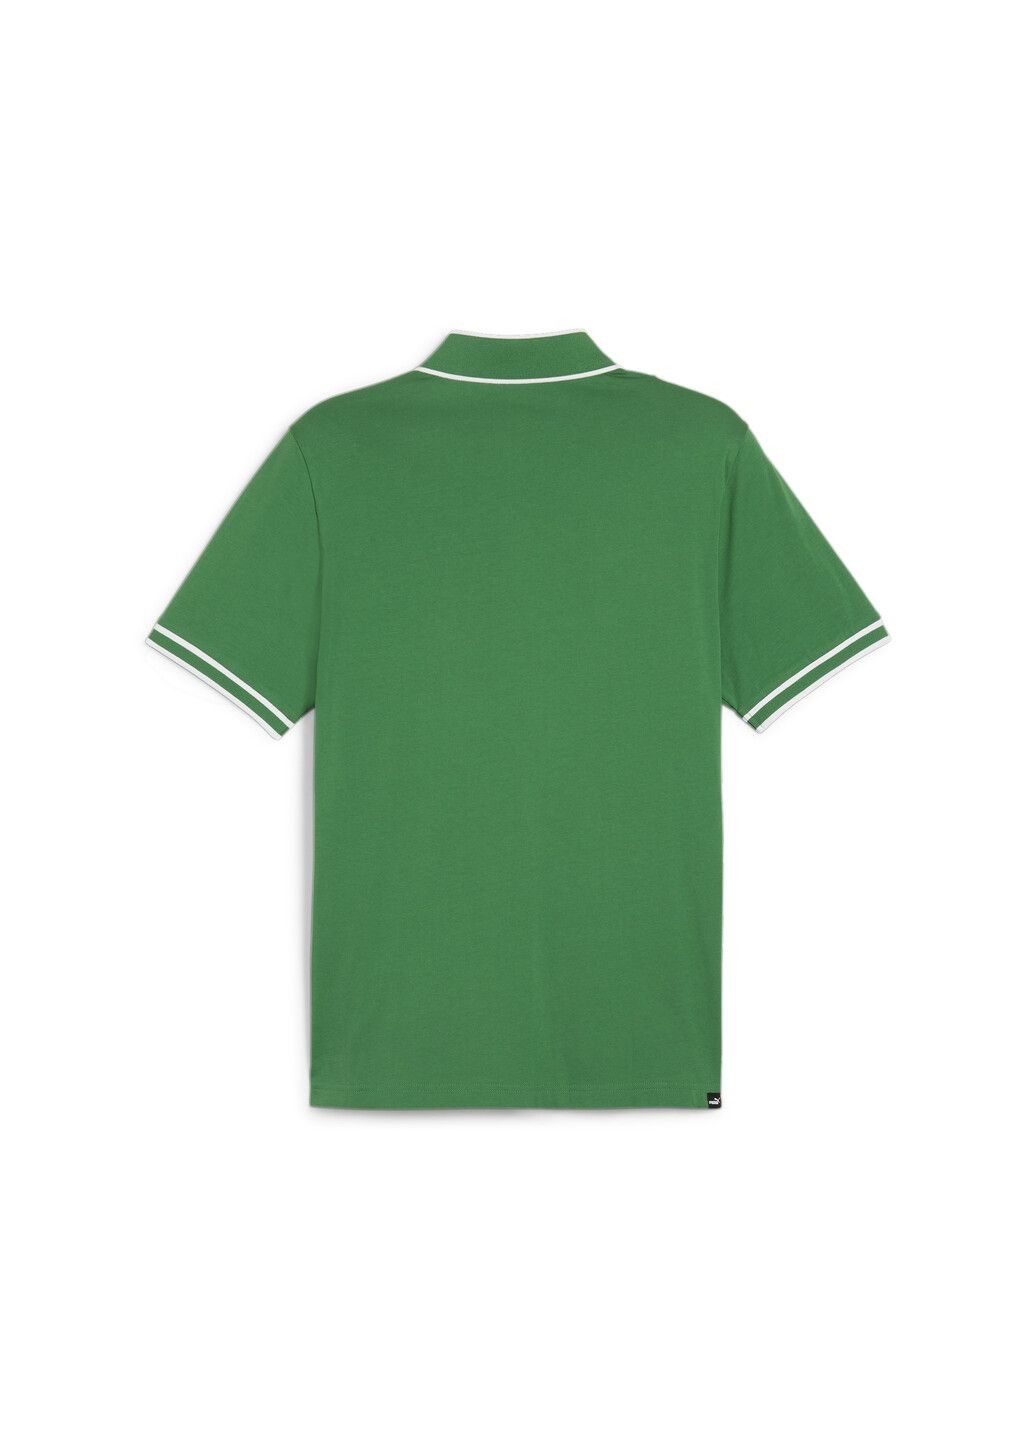 Зеленая футболка-поло squad men's polo для мужчин Puma однотонная